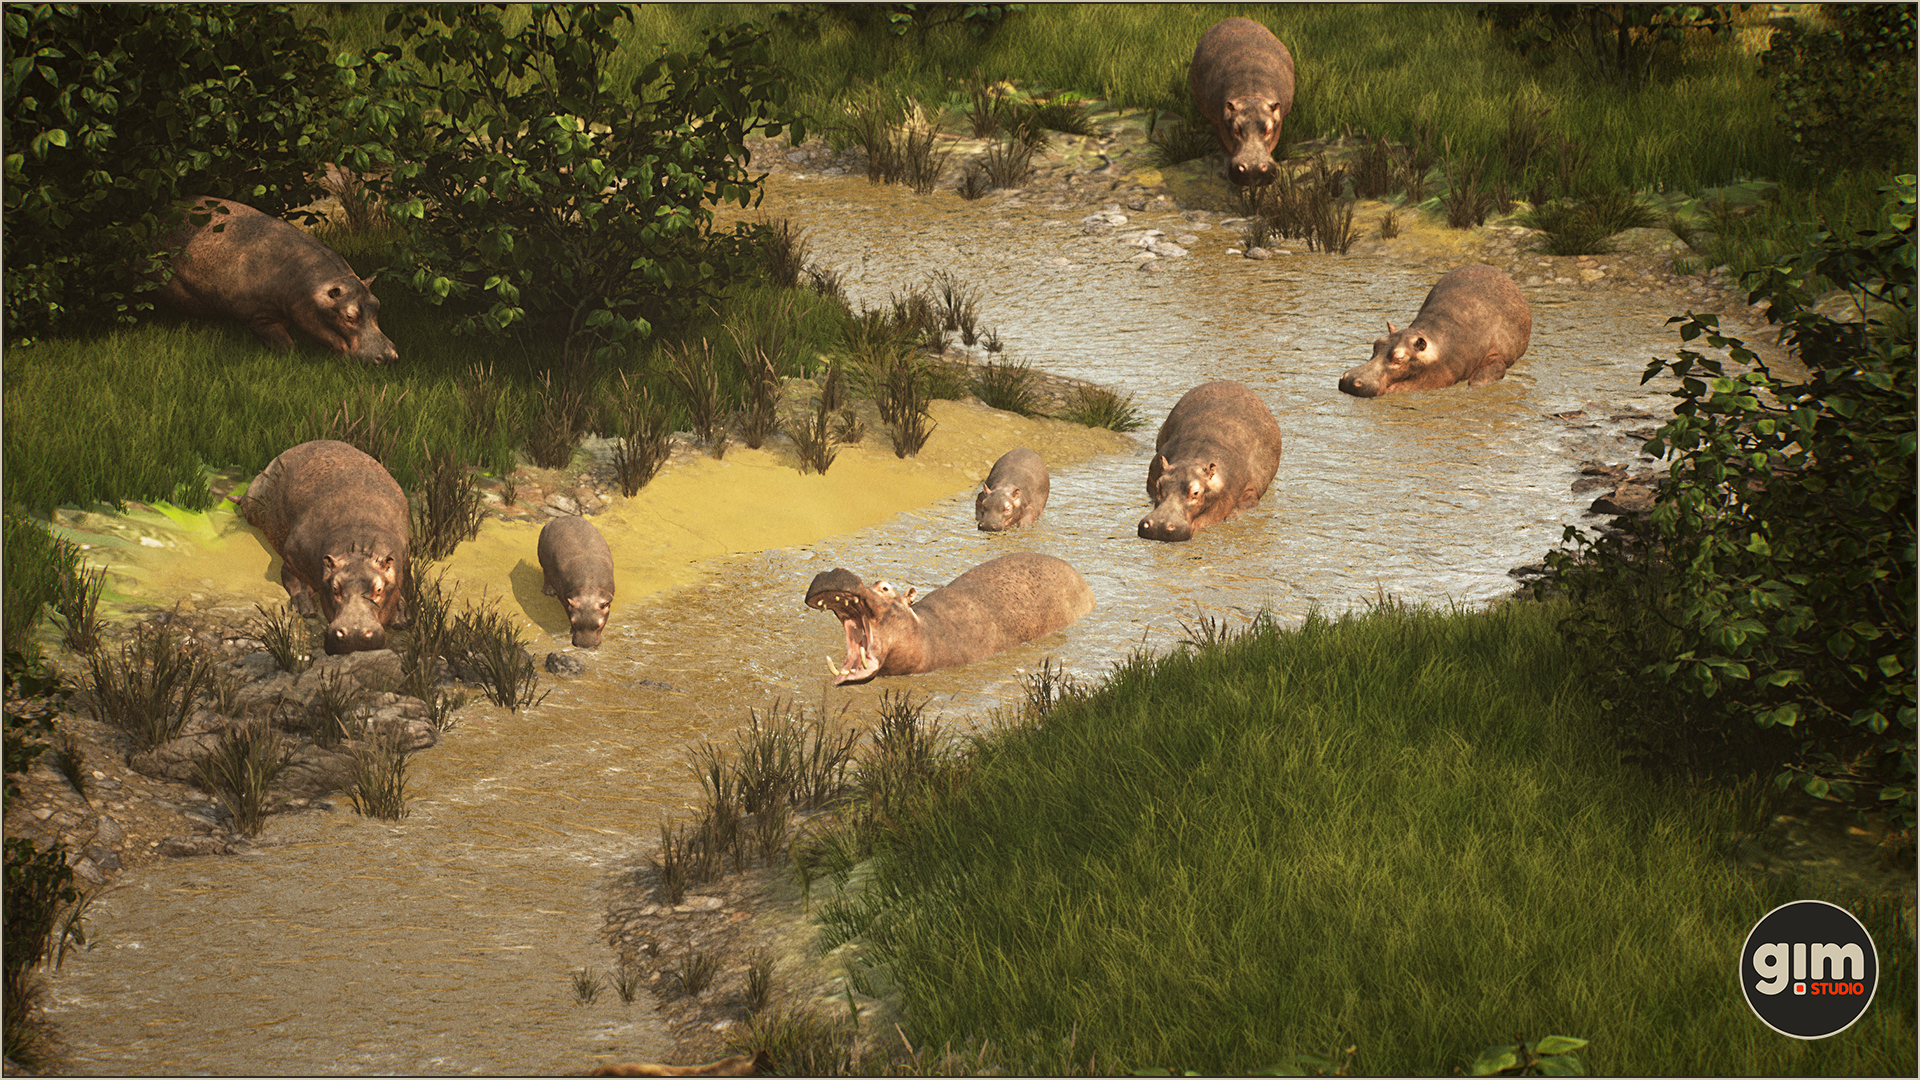 A bloat of Hippos enjoying the water.